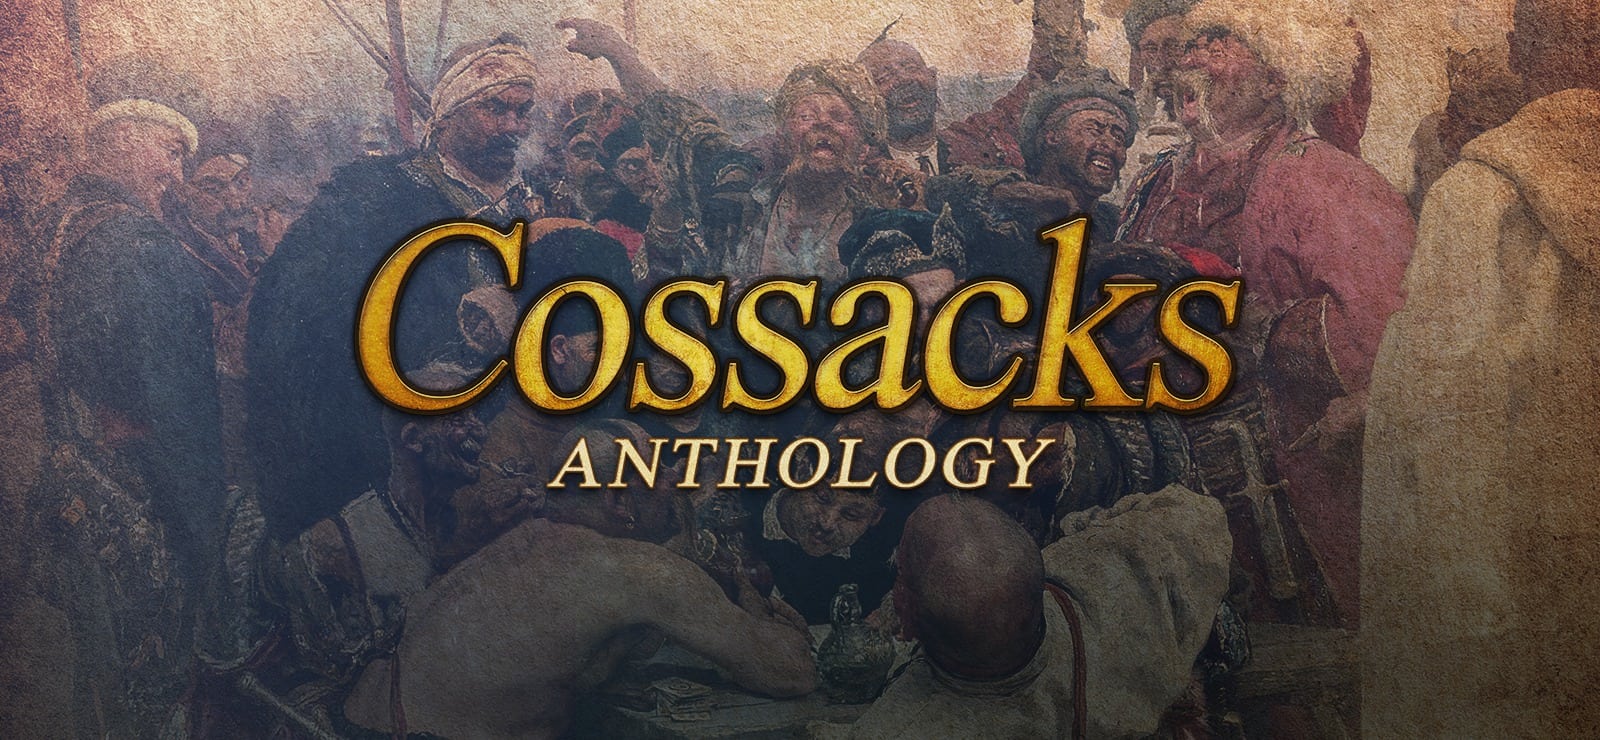 Steam cossacks back фото 61